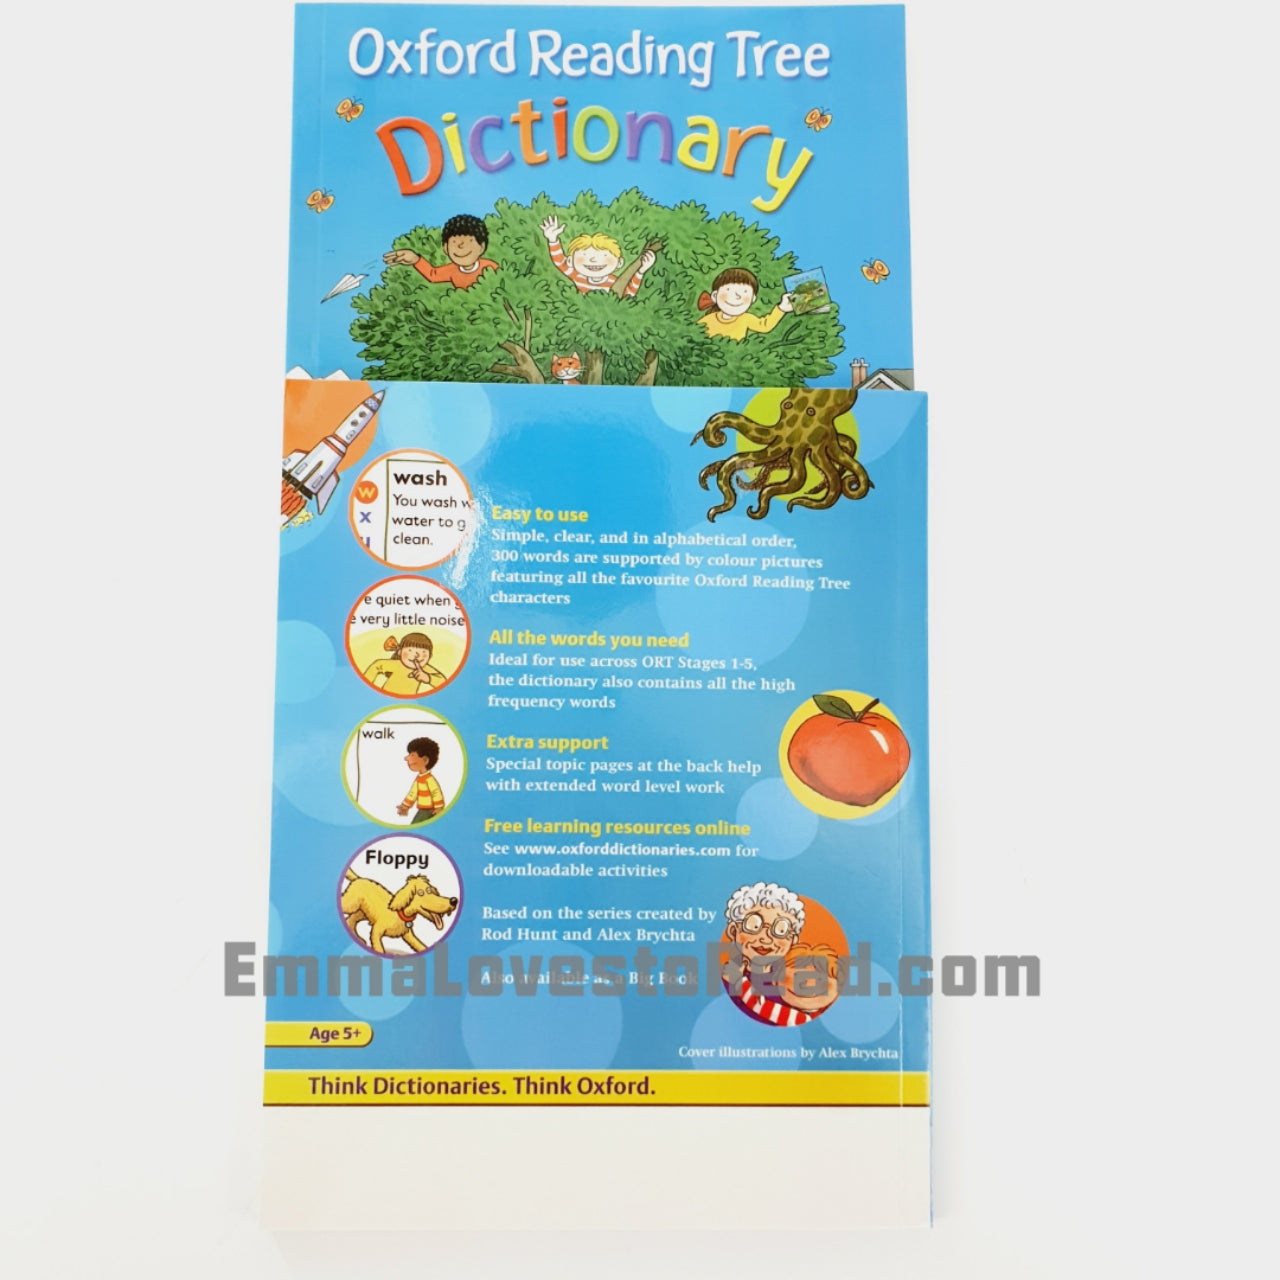 Oxford Reading Tree Dictionary – Emma's Corner